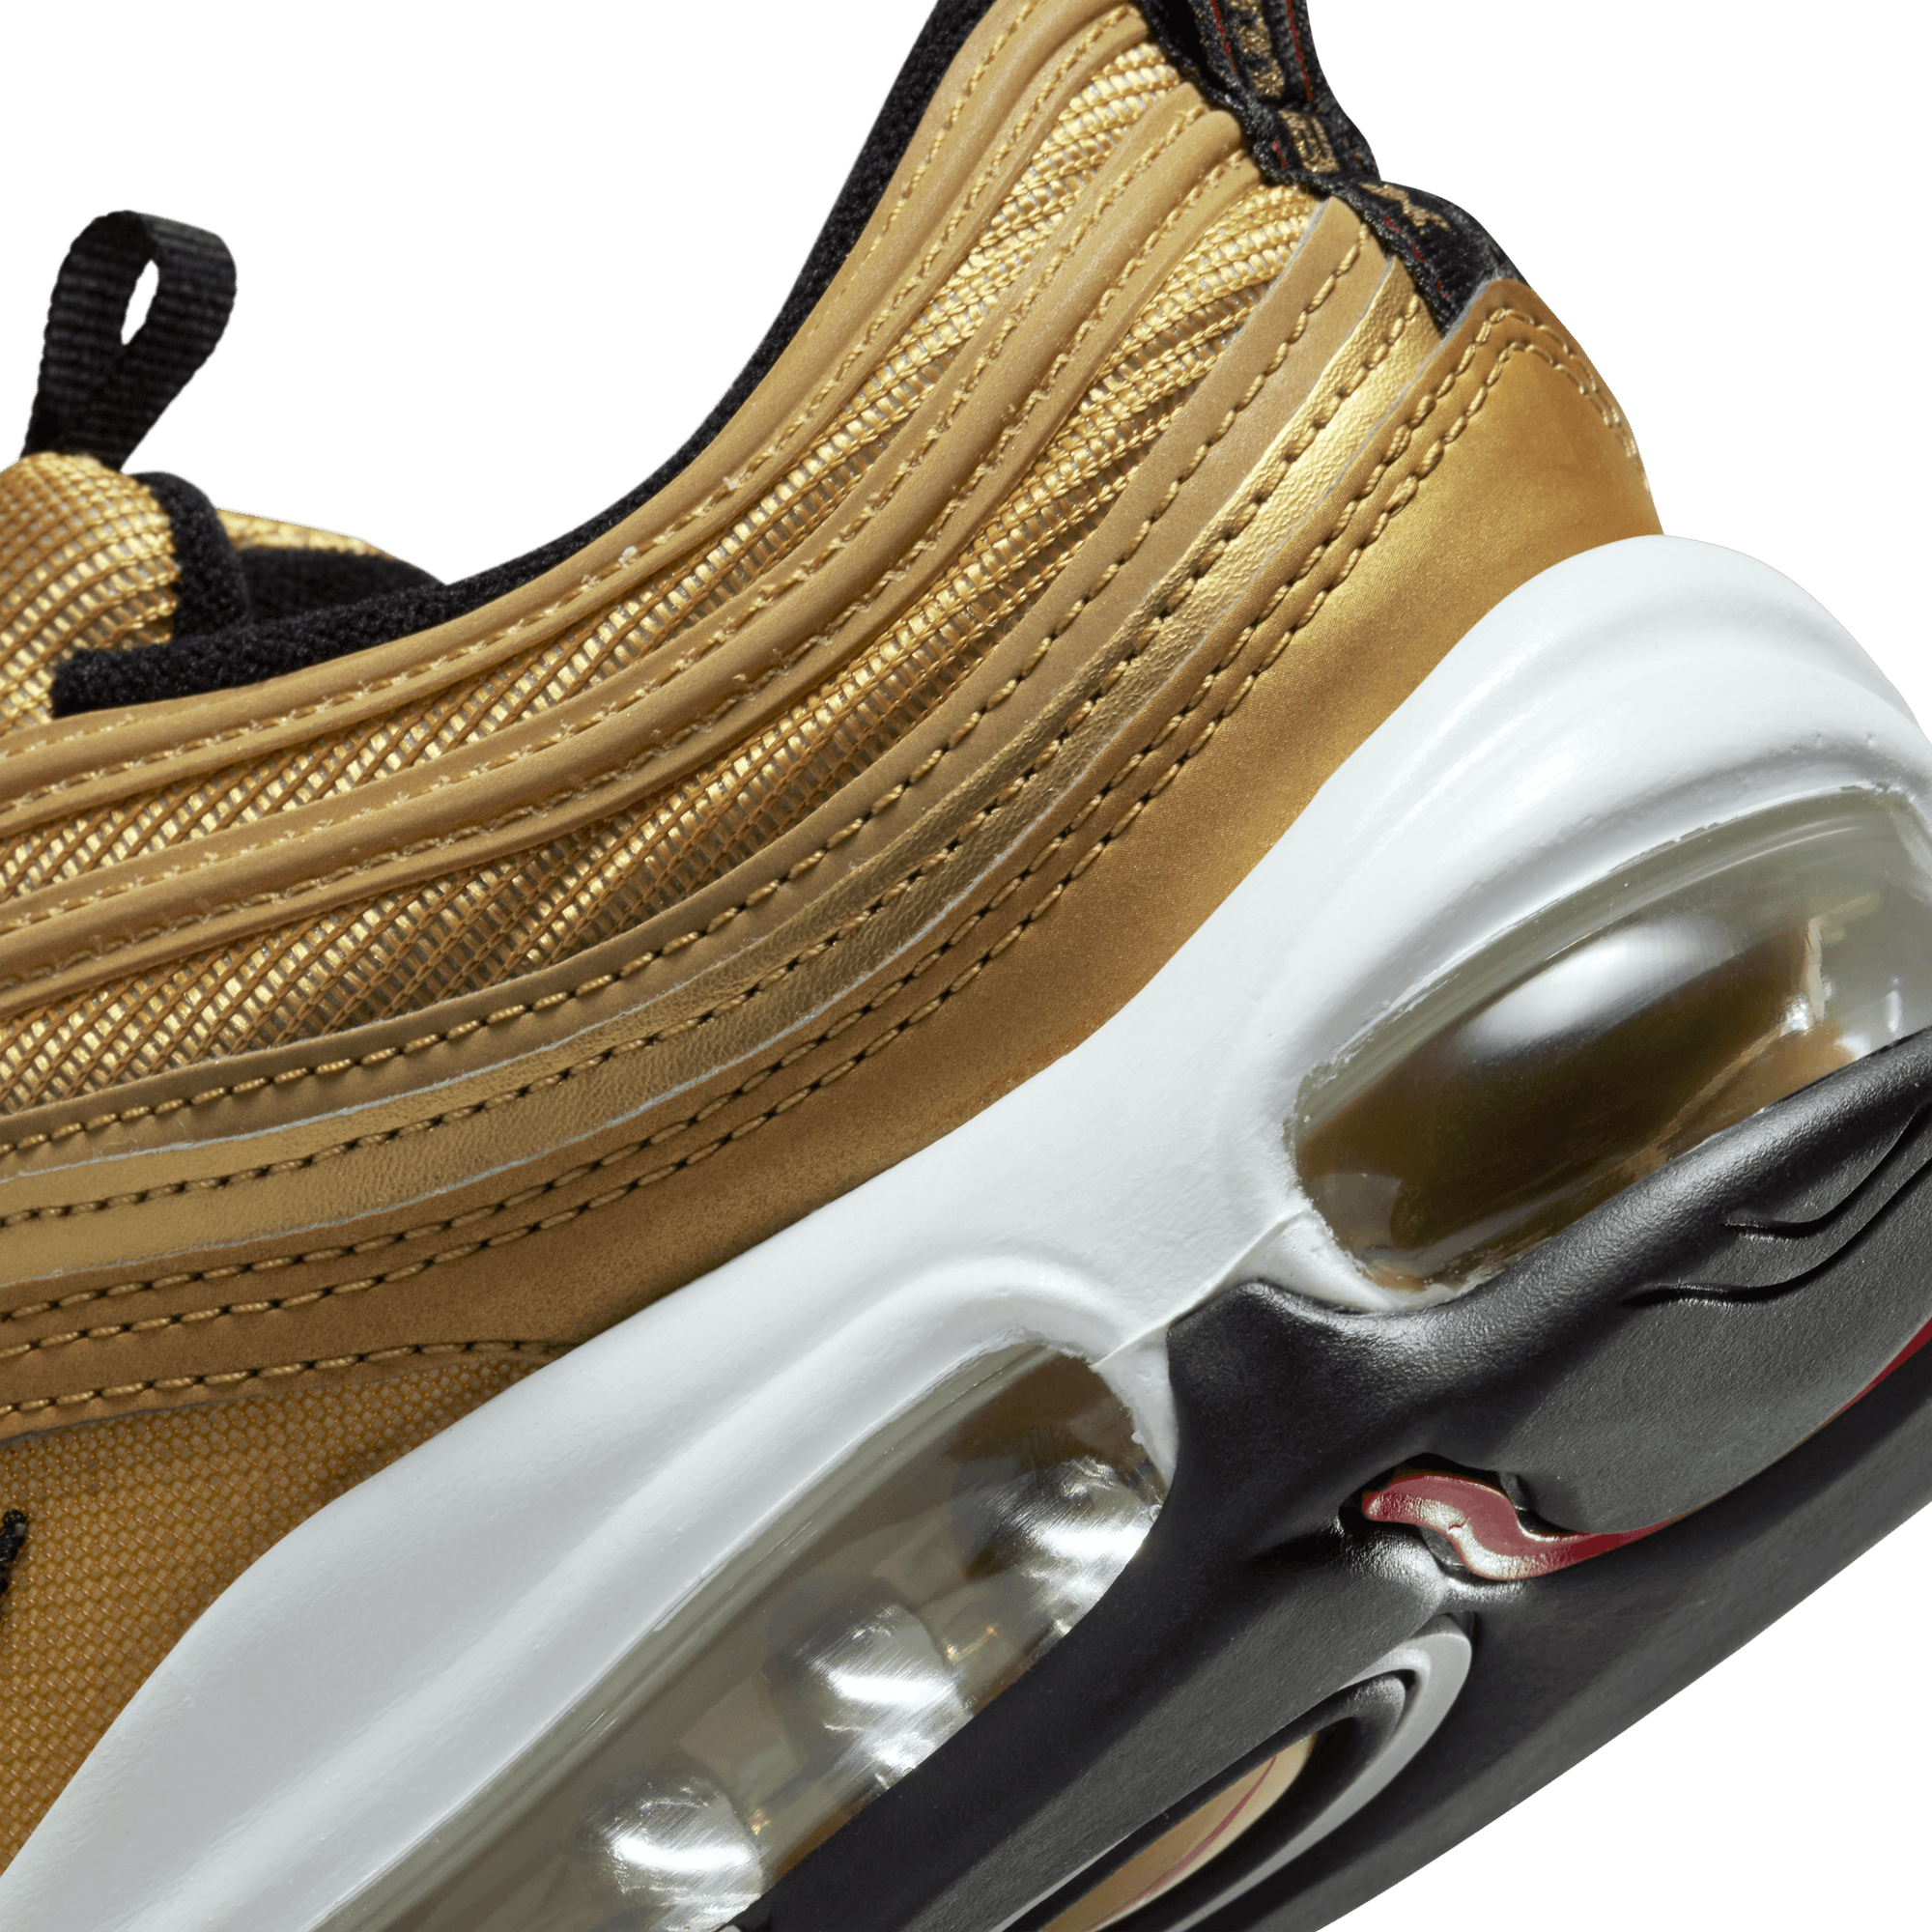 NIKE FOOTWEAR Nike Air Max 97 OG Golden Bullet - Women's